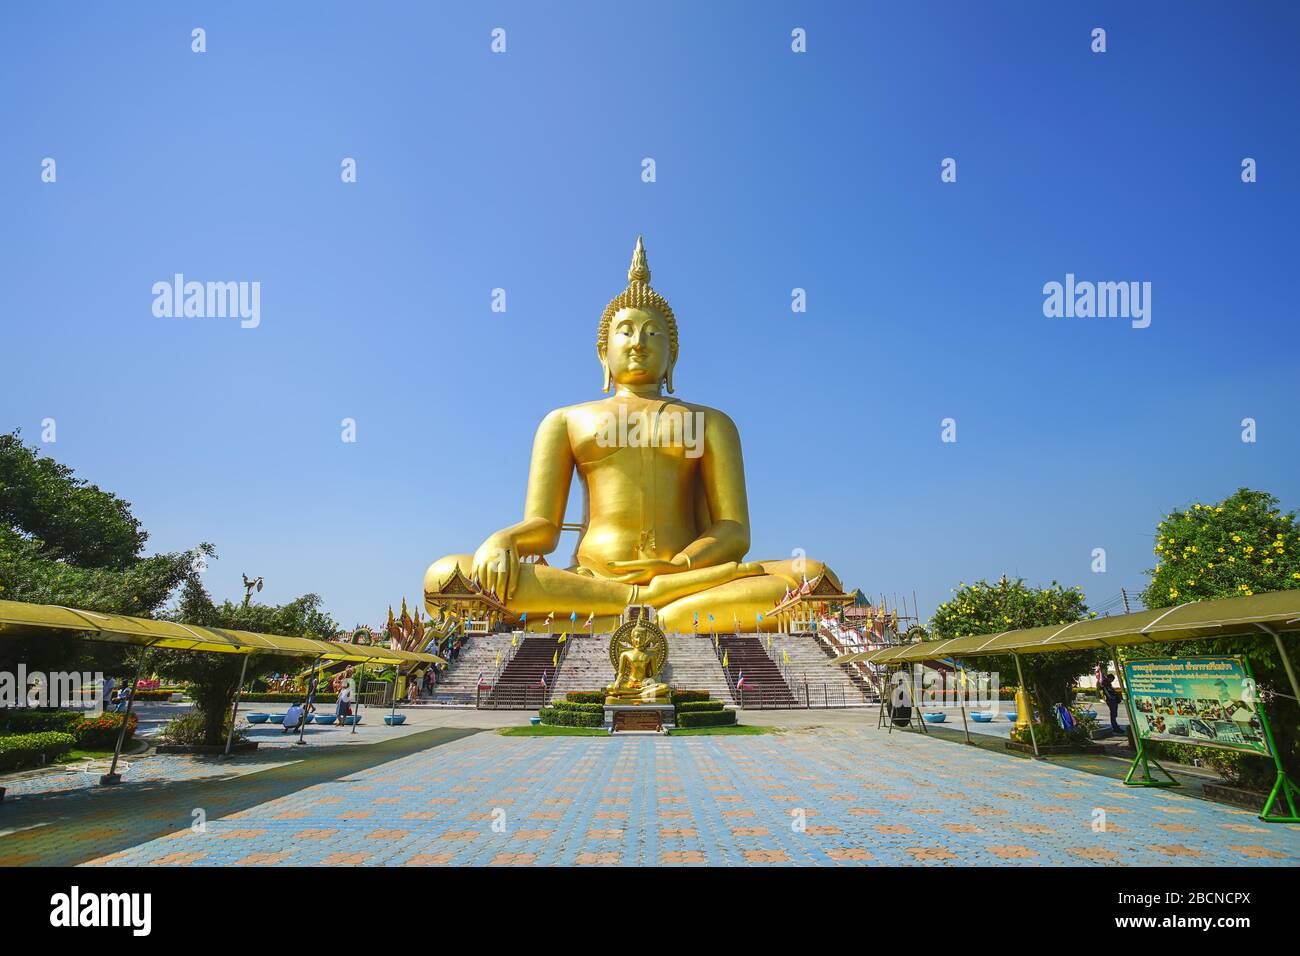 Ang Thong, Thailand - 17. November 2019: Die größte Buddha-Statue der Welt im Wat Muang, Provinz Ang Thong, Thailand. Stockfoto